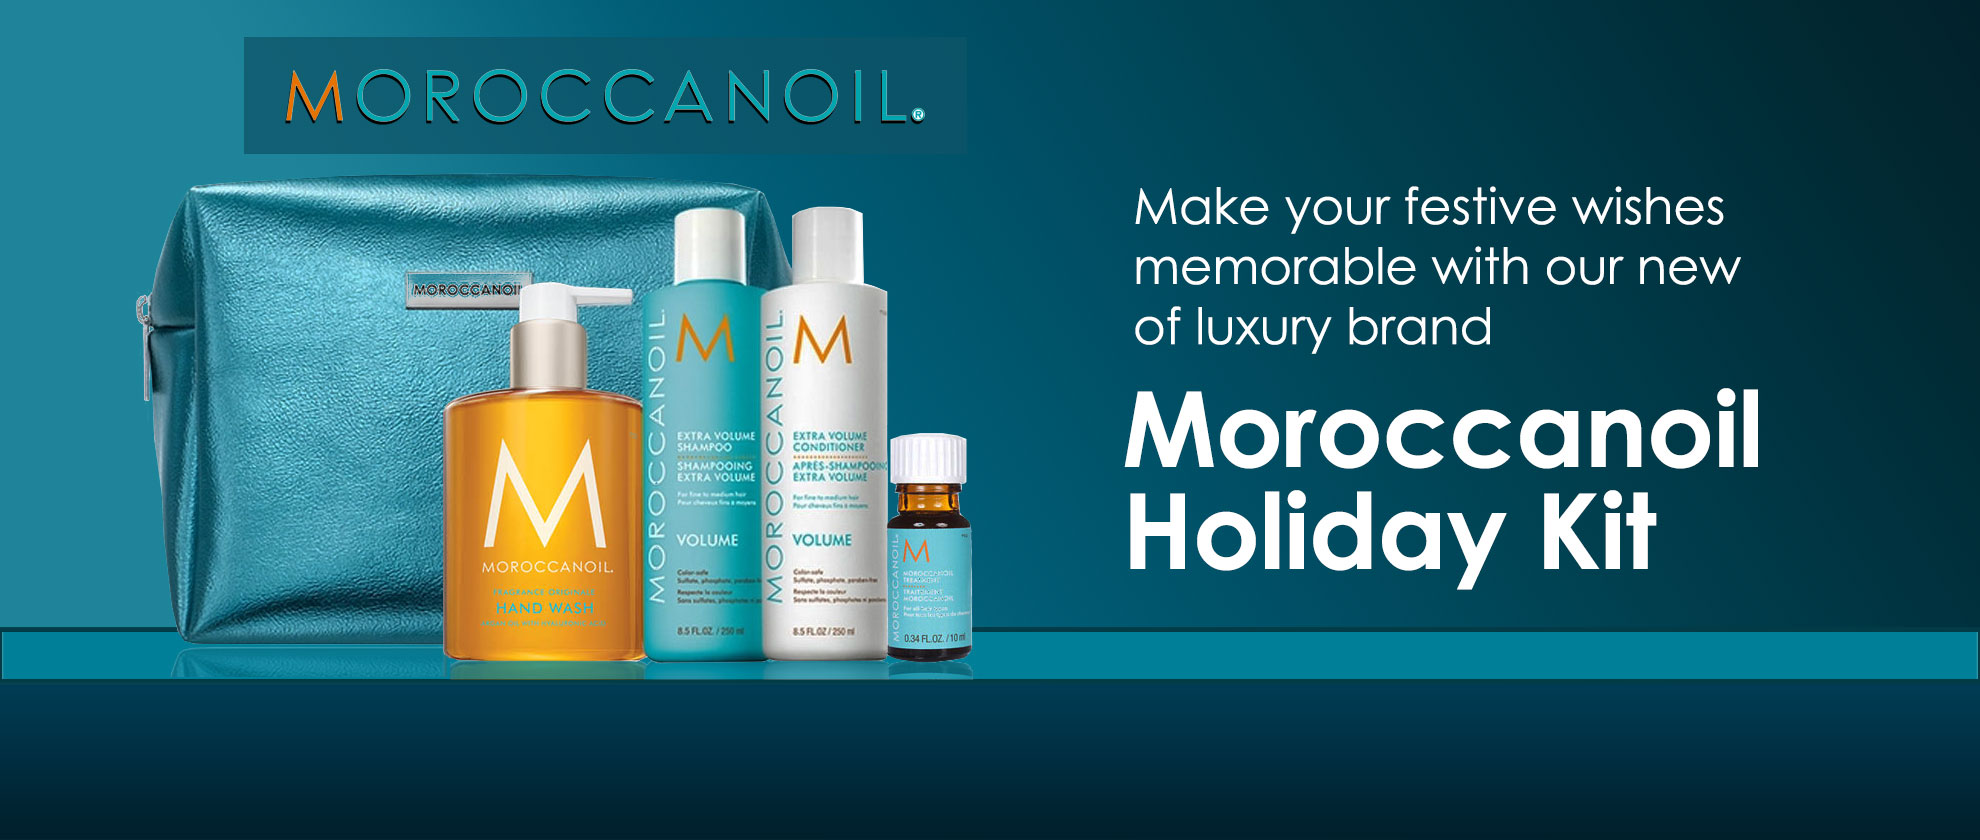 Moroccan holiday kit